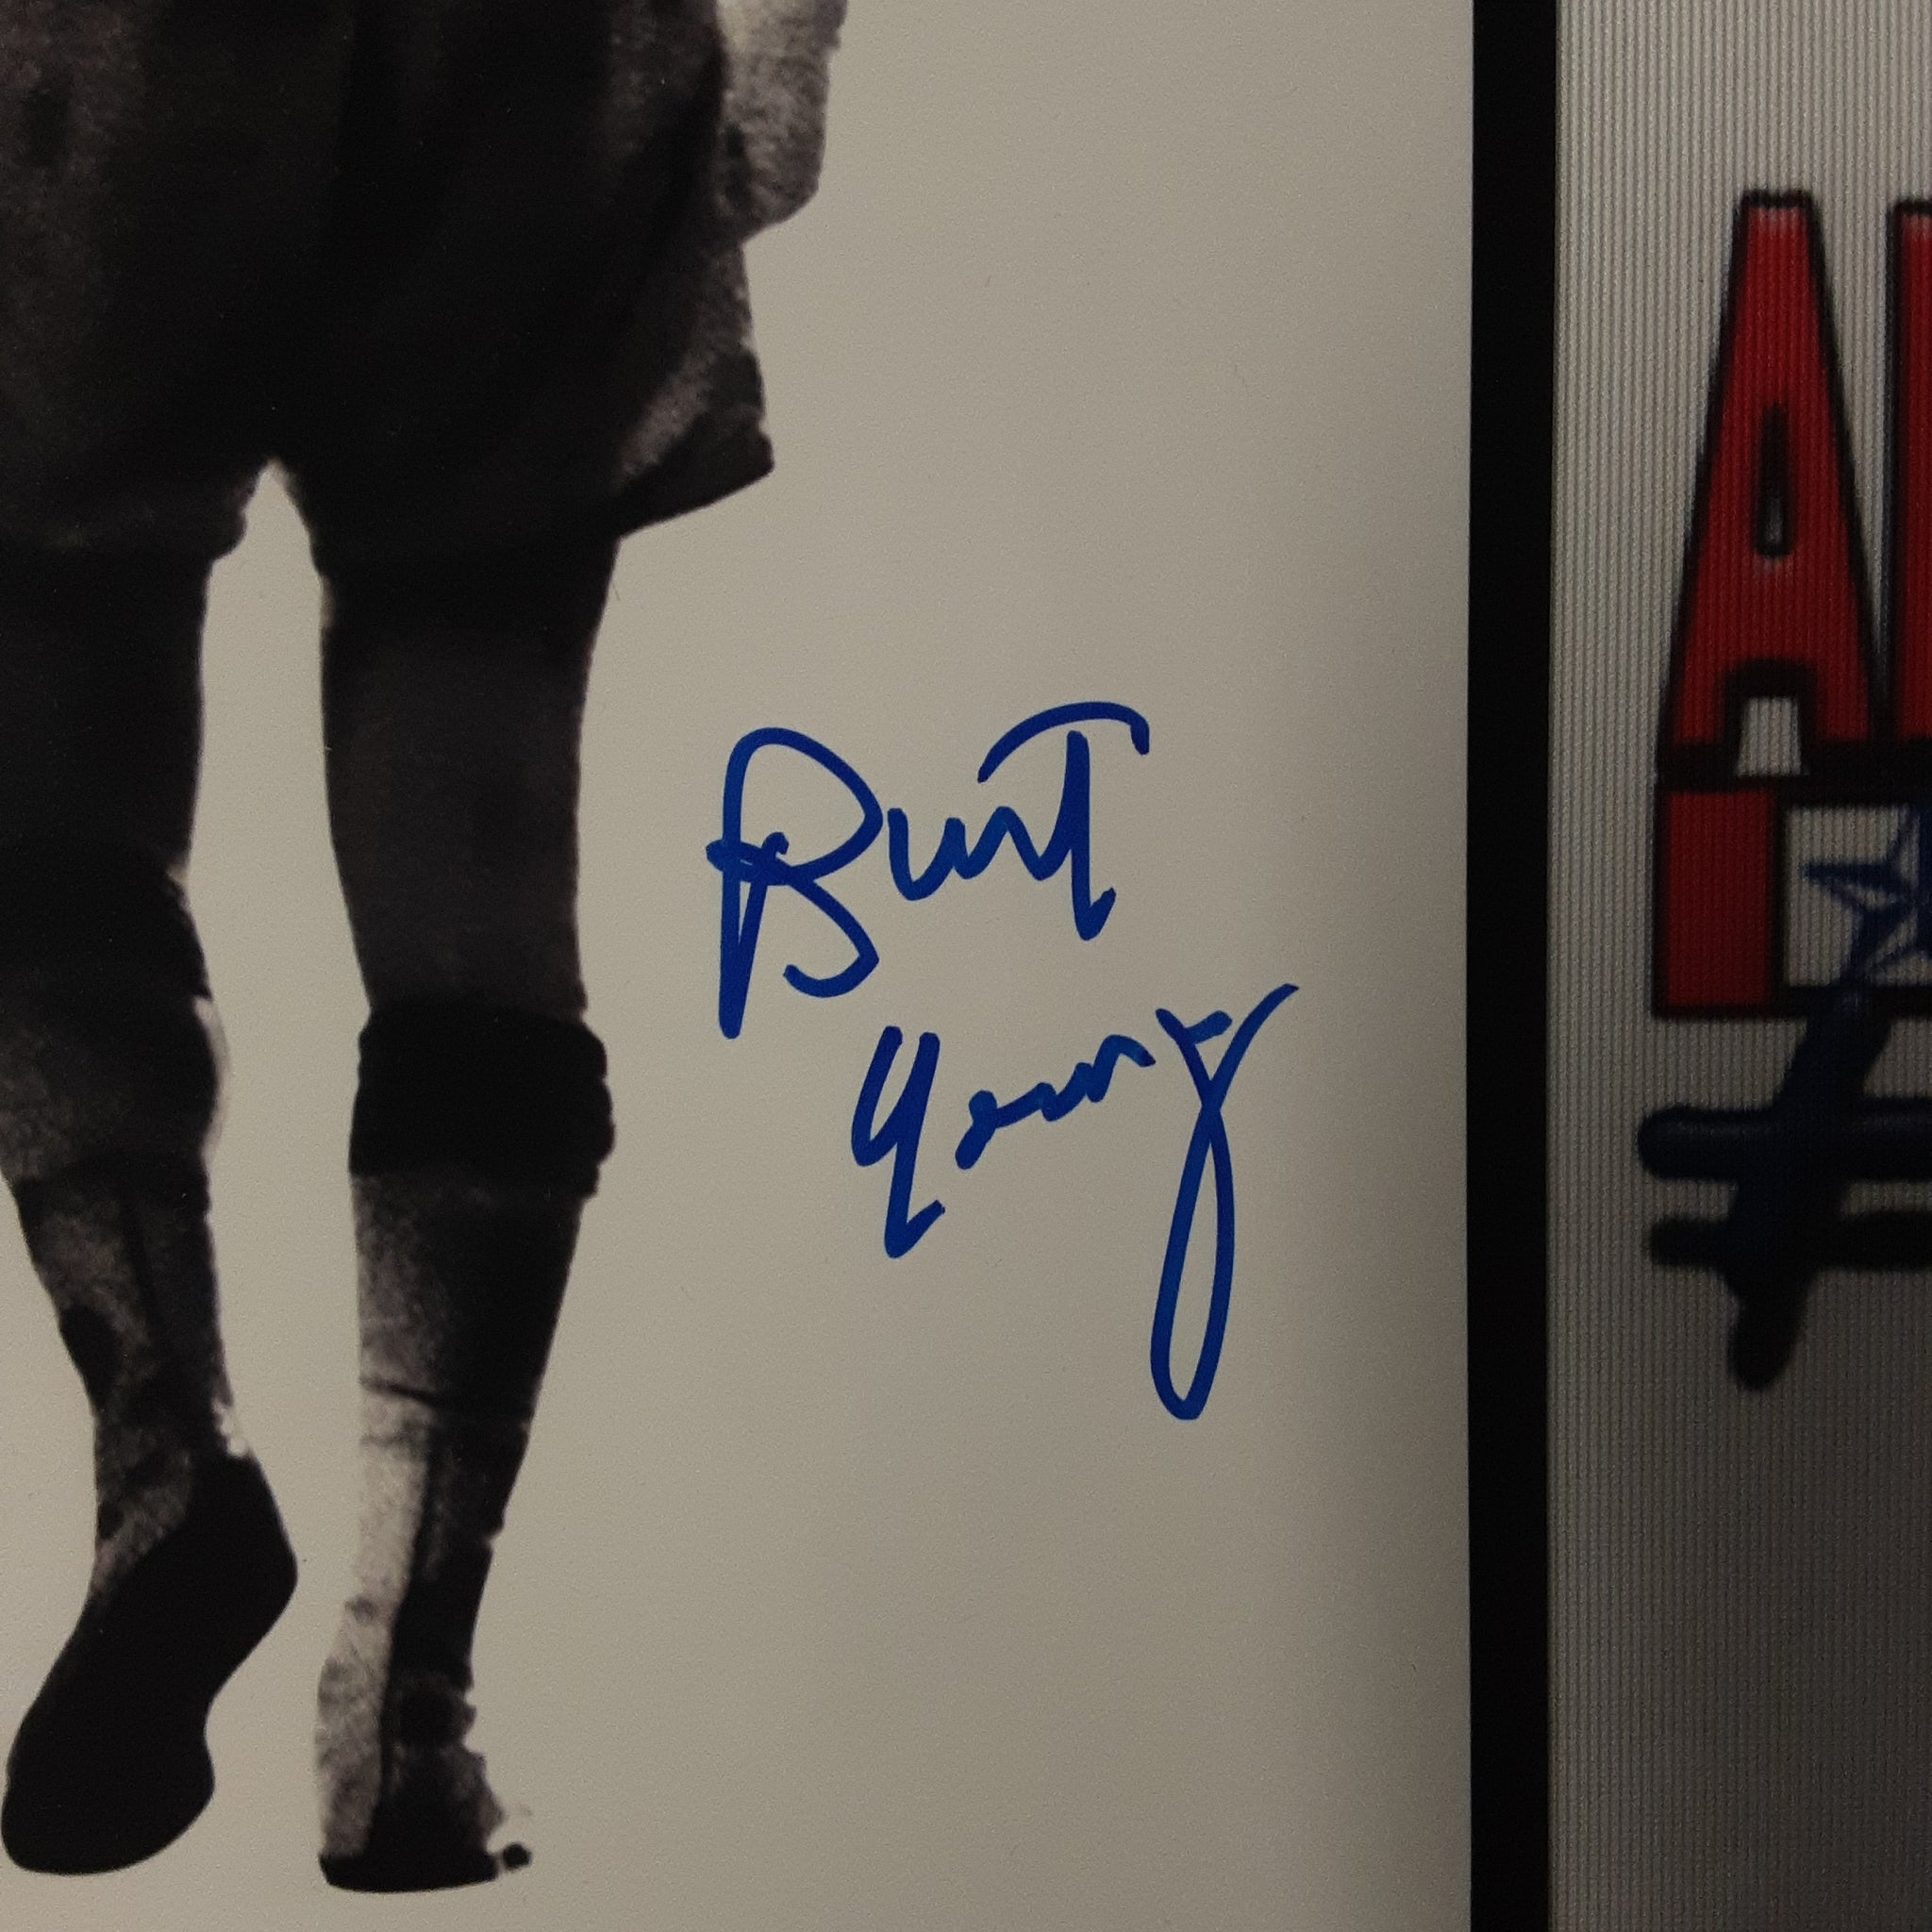 Burt Young Authentic Signed 11x17 Photo Autographed JSA.